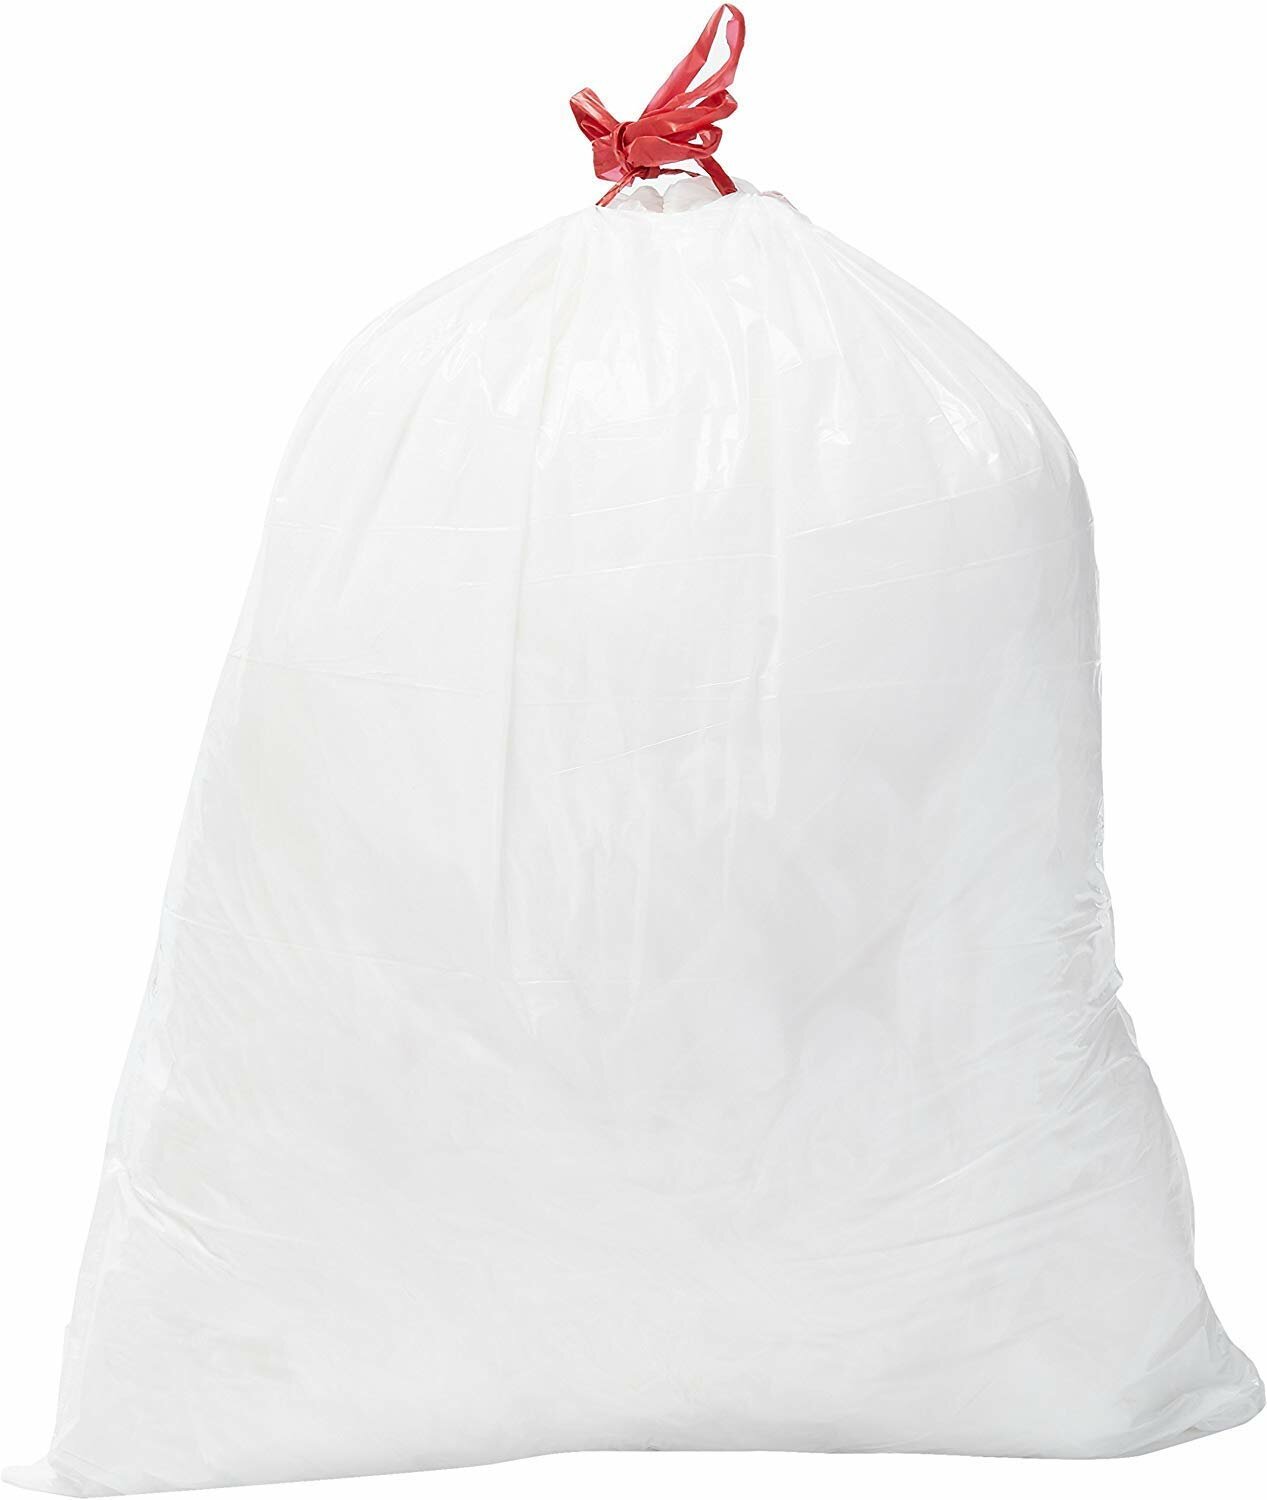 Trash Bags 13 Gallon Tall Kitchen Bags: 12-18 Gallon Trash Bags - 45 Kitchen Trash Bags per Box.